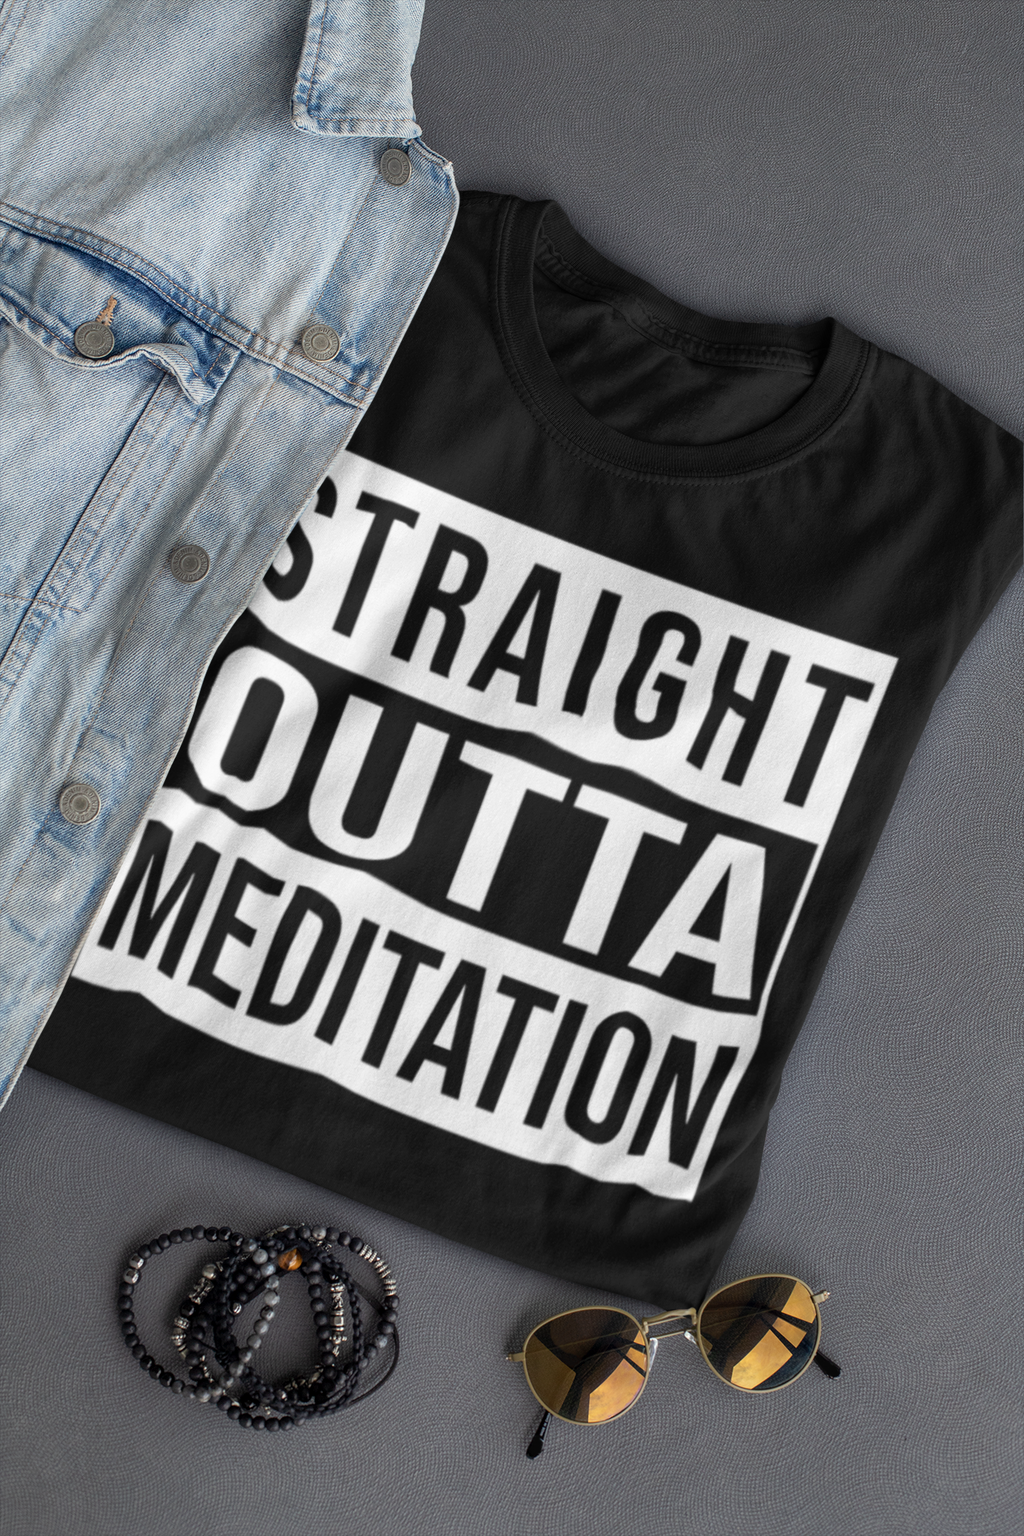 Straight Outta Meditation - Men's Tshirt